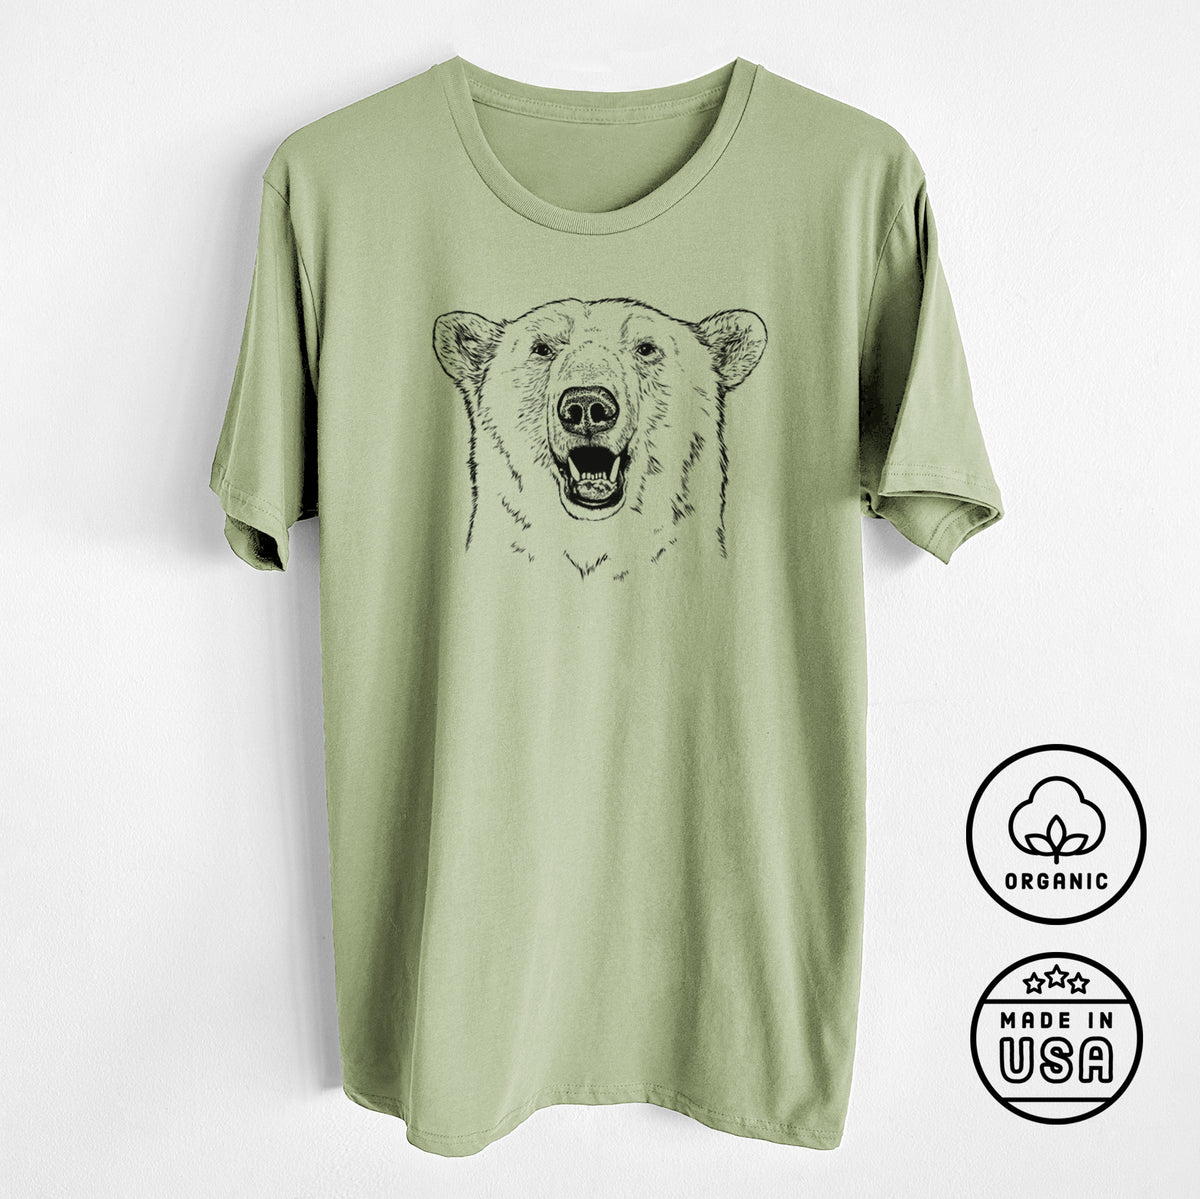 Ursus Maritimus - Polar Bear - Unisex Crewneck - Made in USA - 100% Organic Cotton